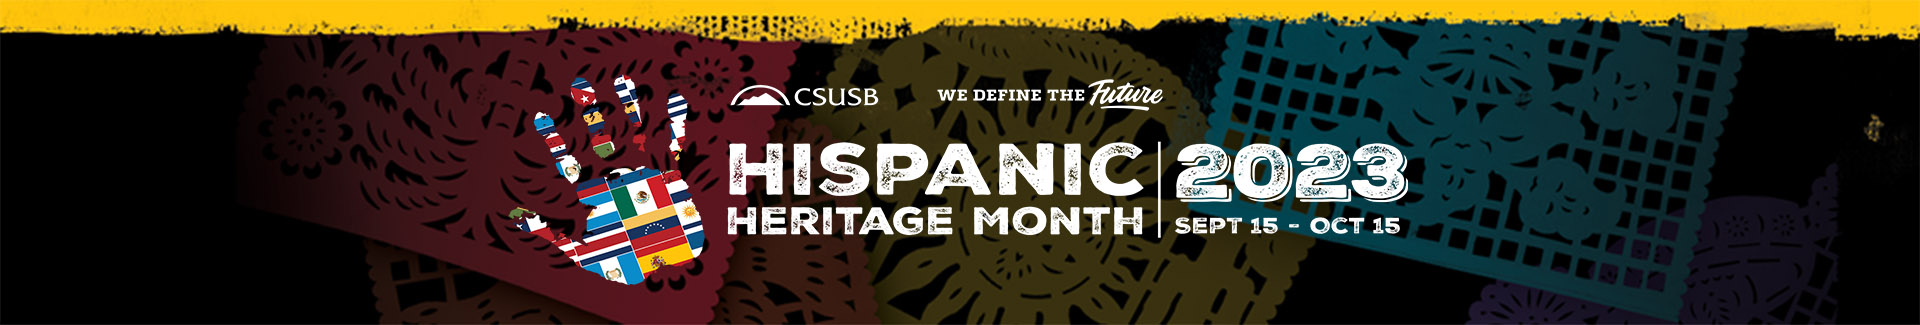 "Hispanic Heritage Month Banner"